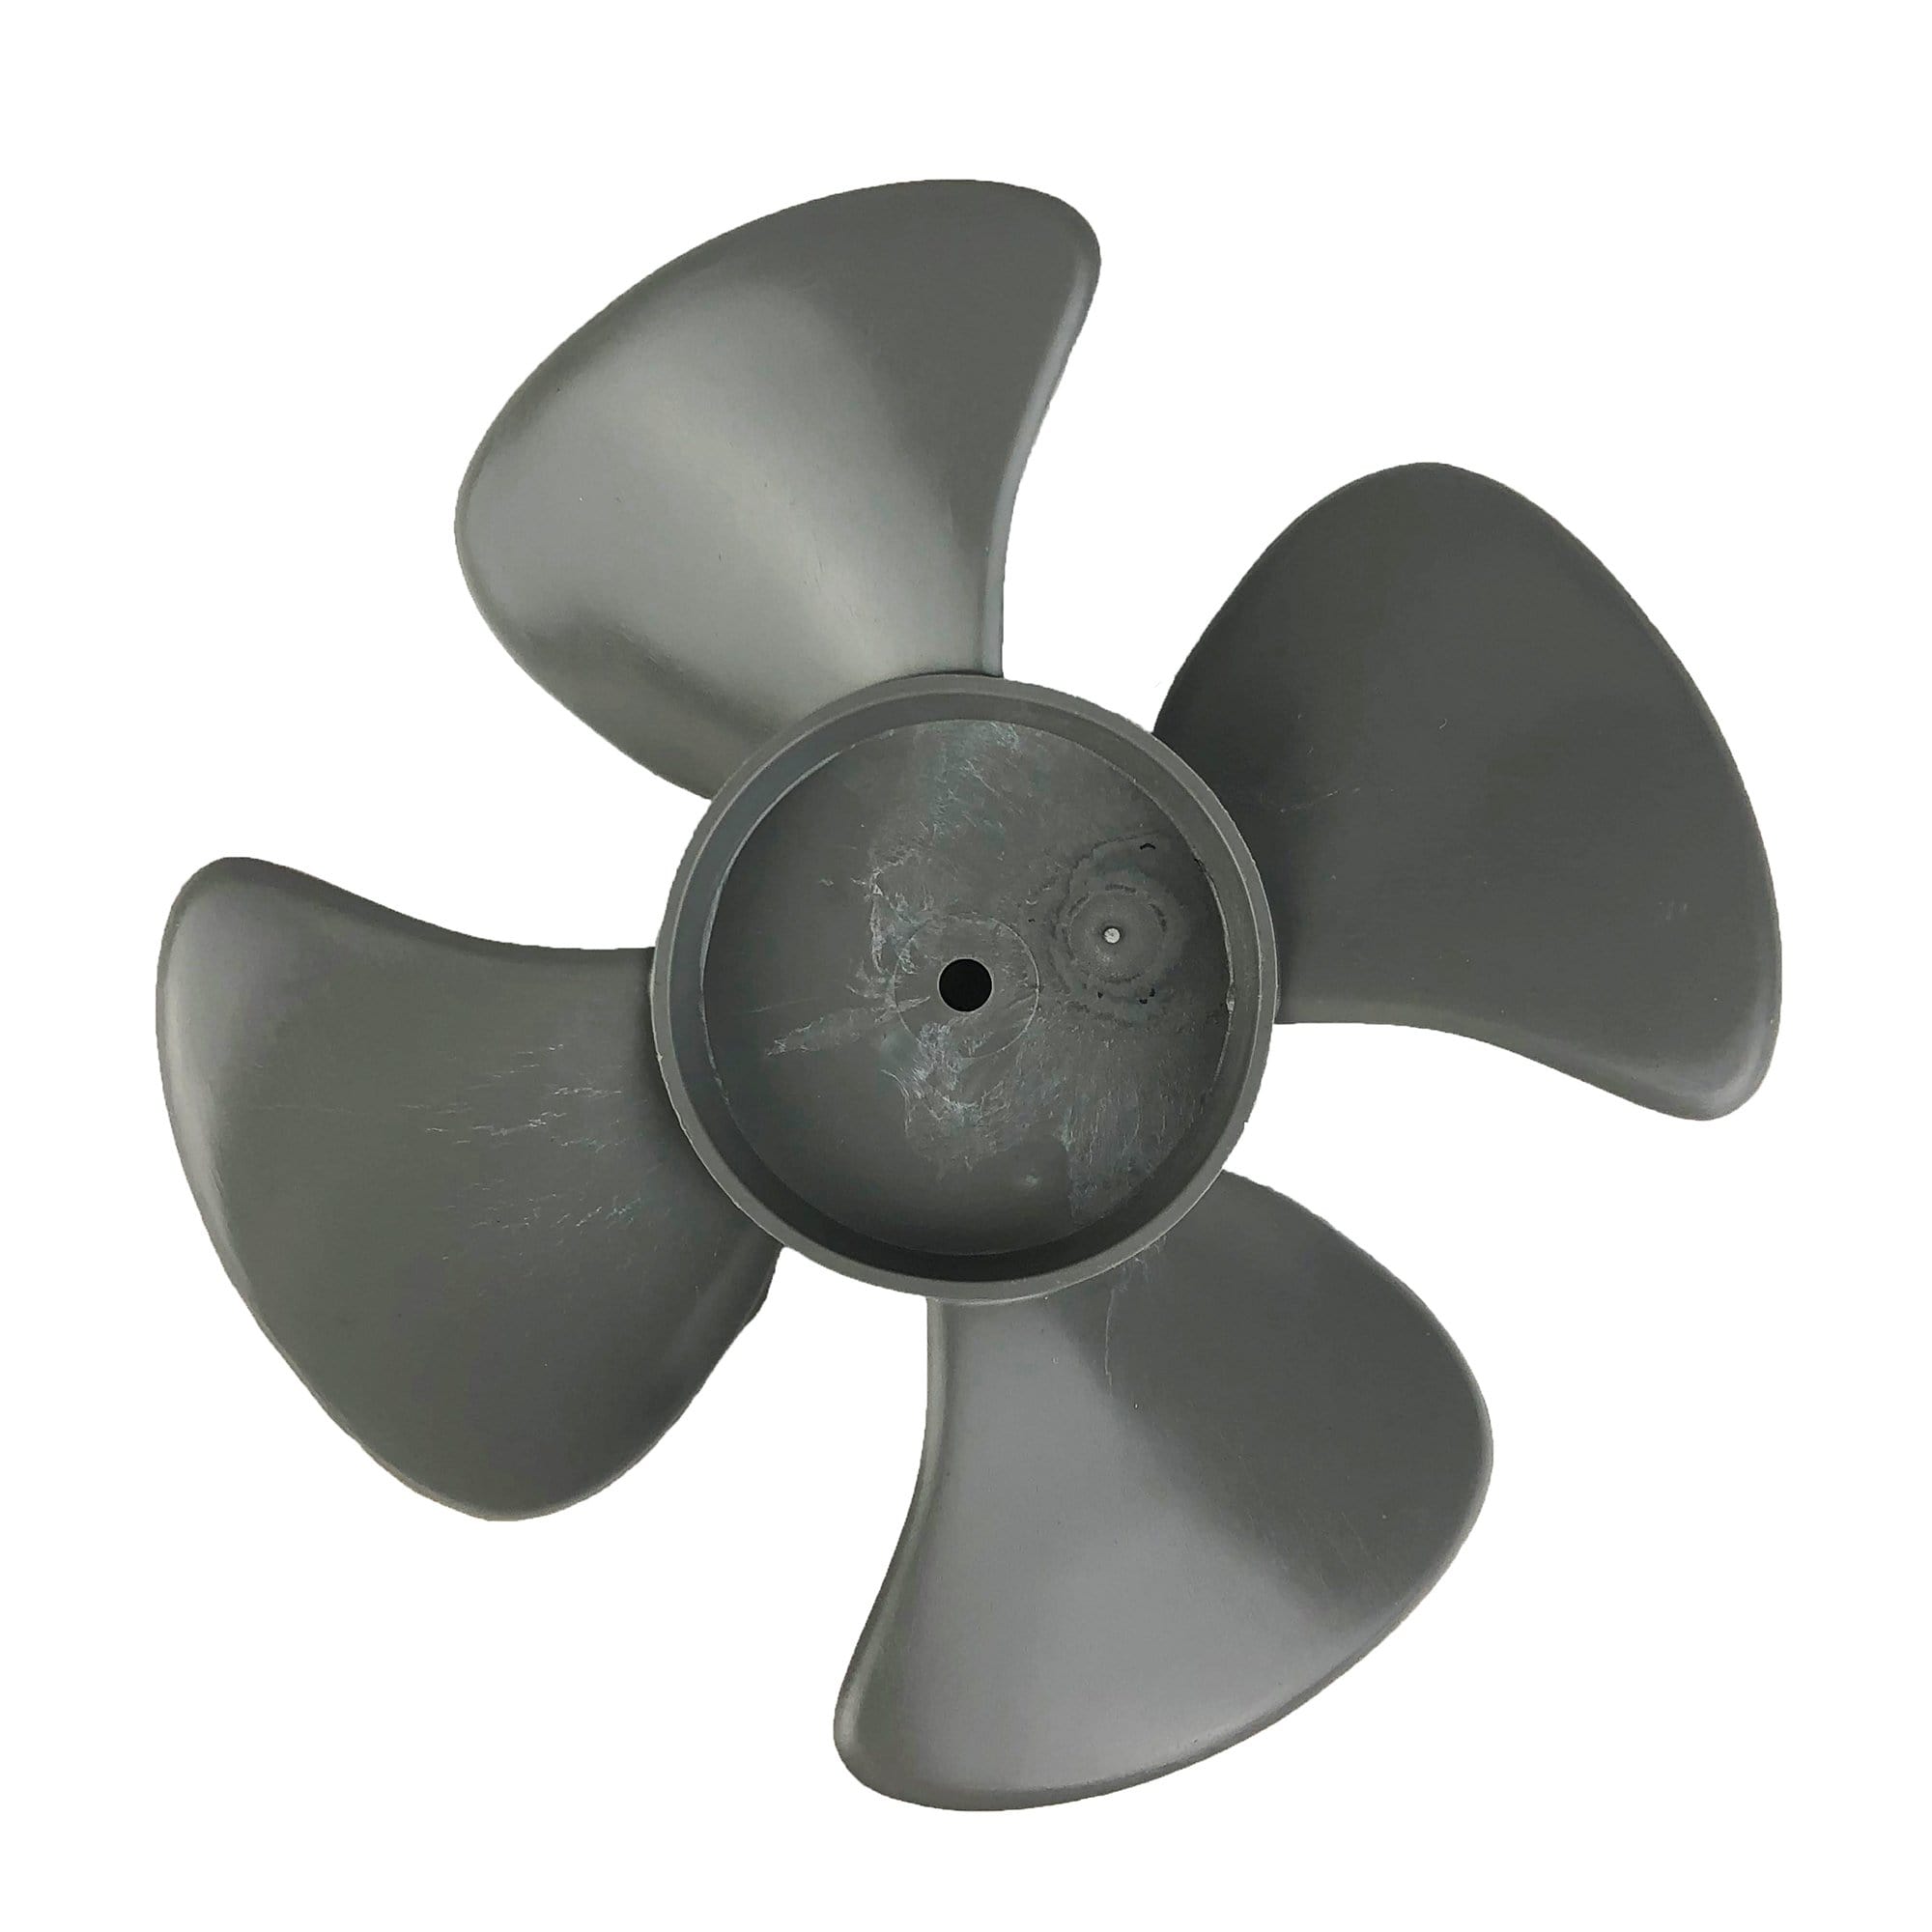 Packard A61550 5-1/2" Diameter Plastic Fan Blades CCW Rotation